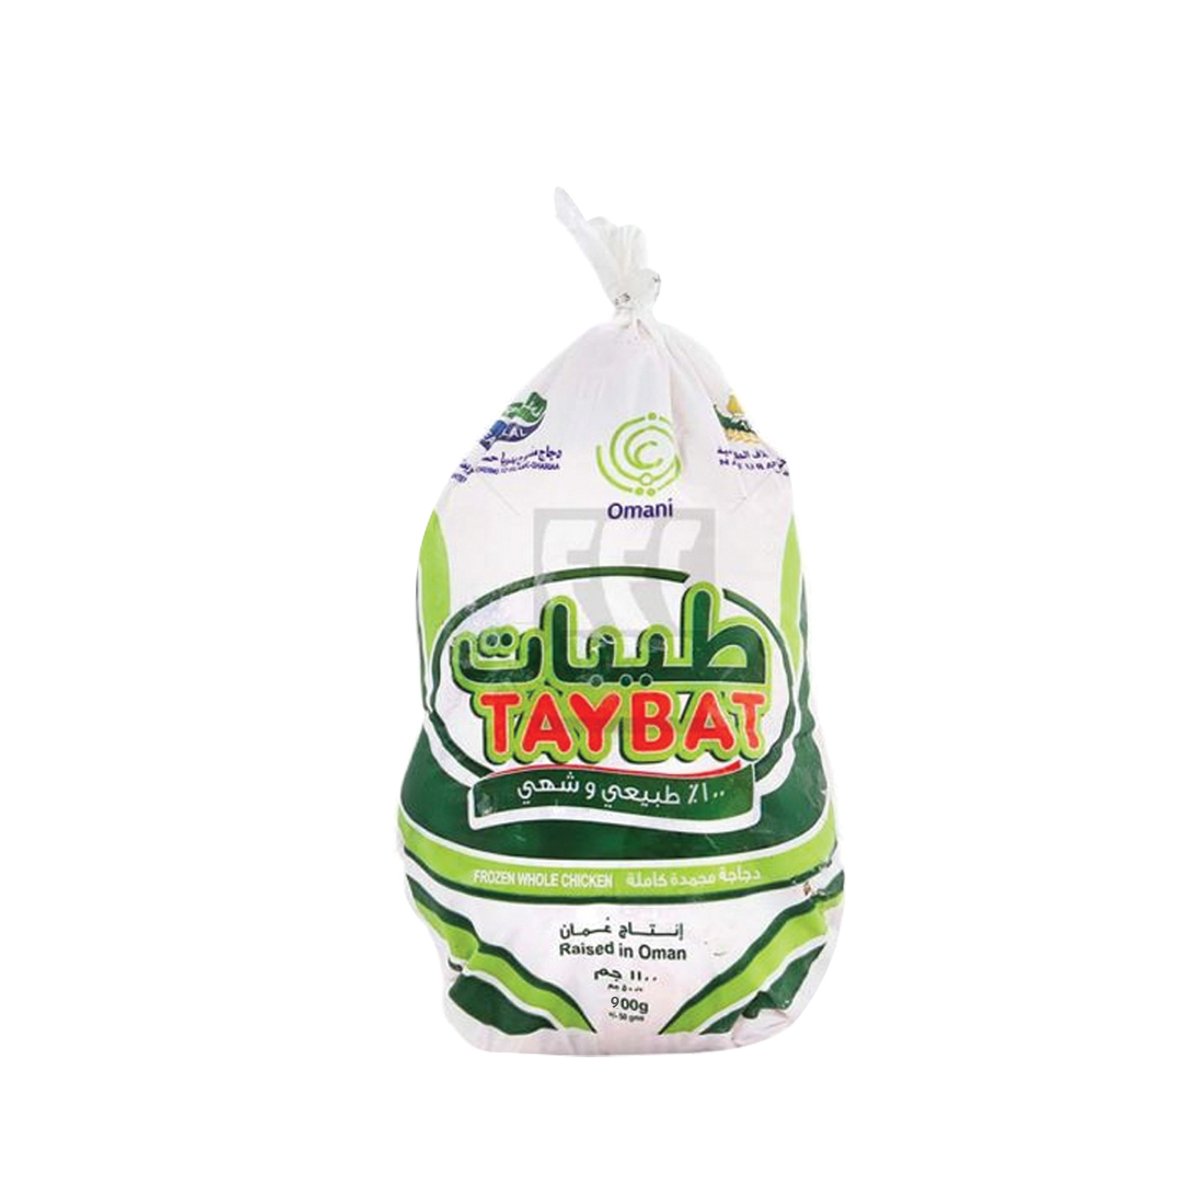 Taybat Whole Chicken 2 x 900g